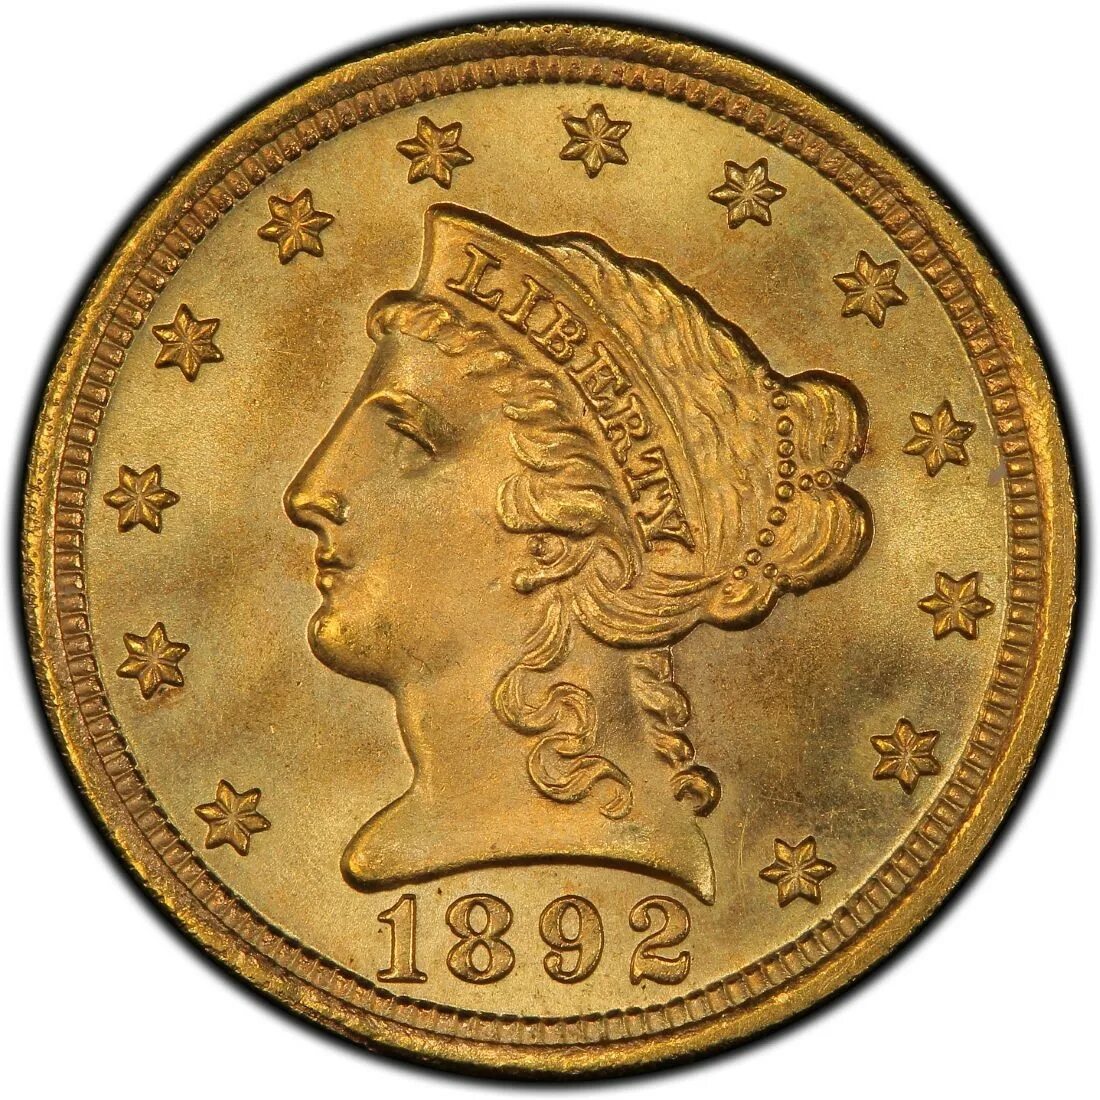 50 золотых рублей цена. Либерти Золотая монета США ИБЭЙ. Орел на монете. Платиновые монеты США. Related монета.